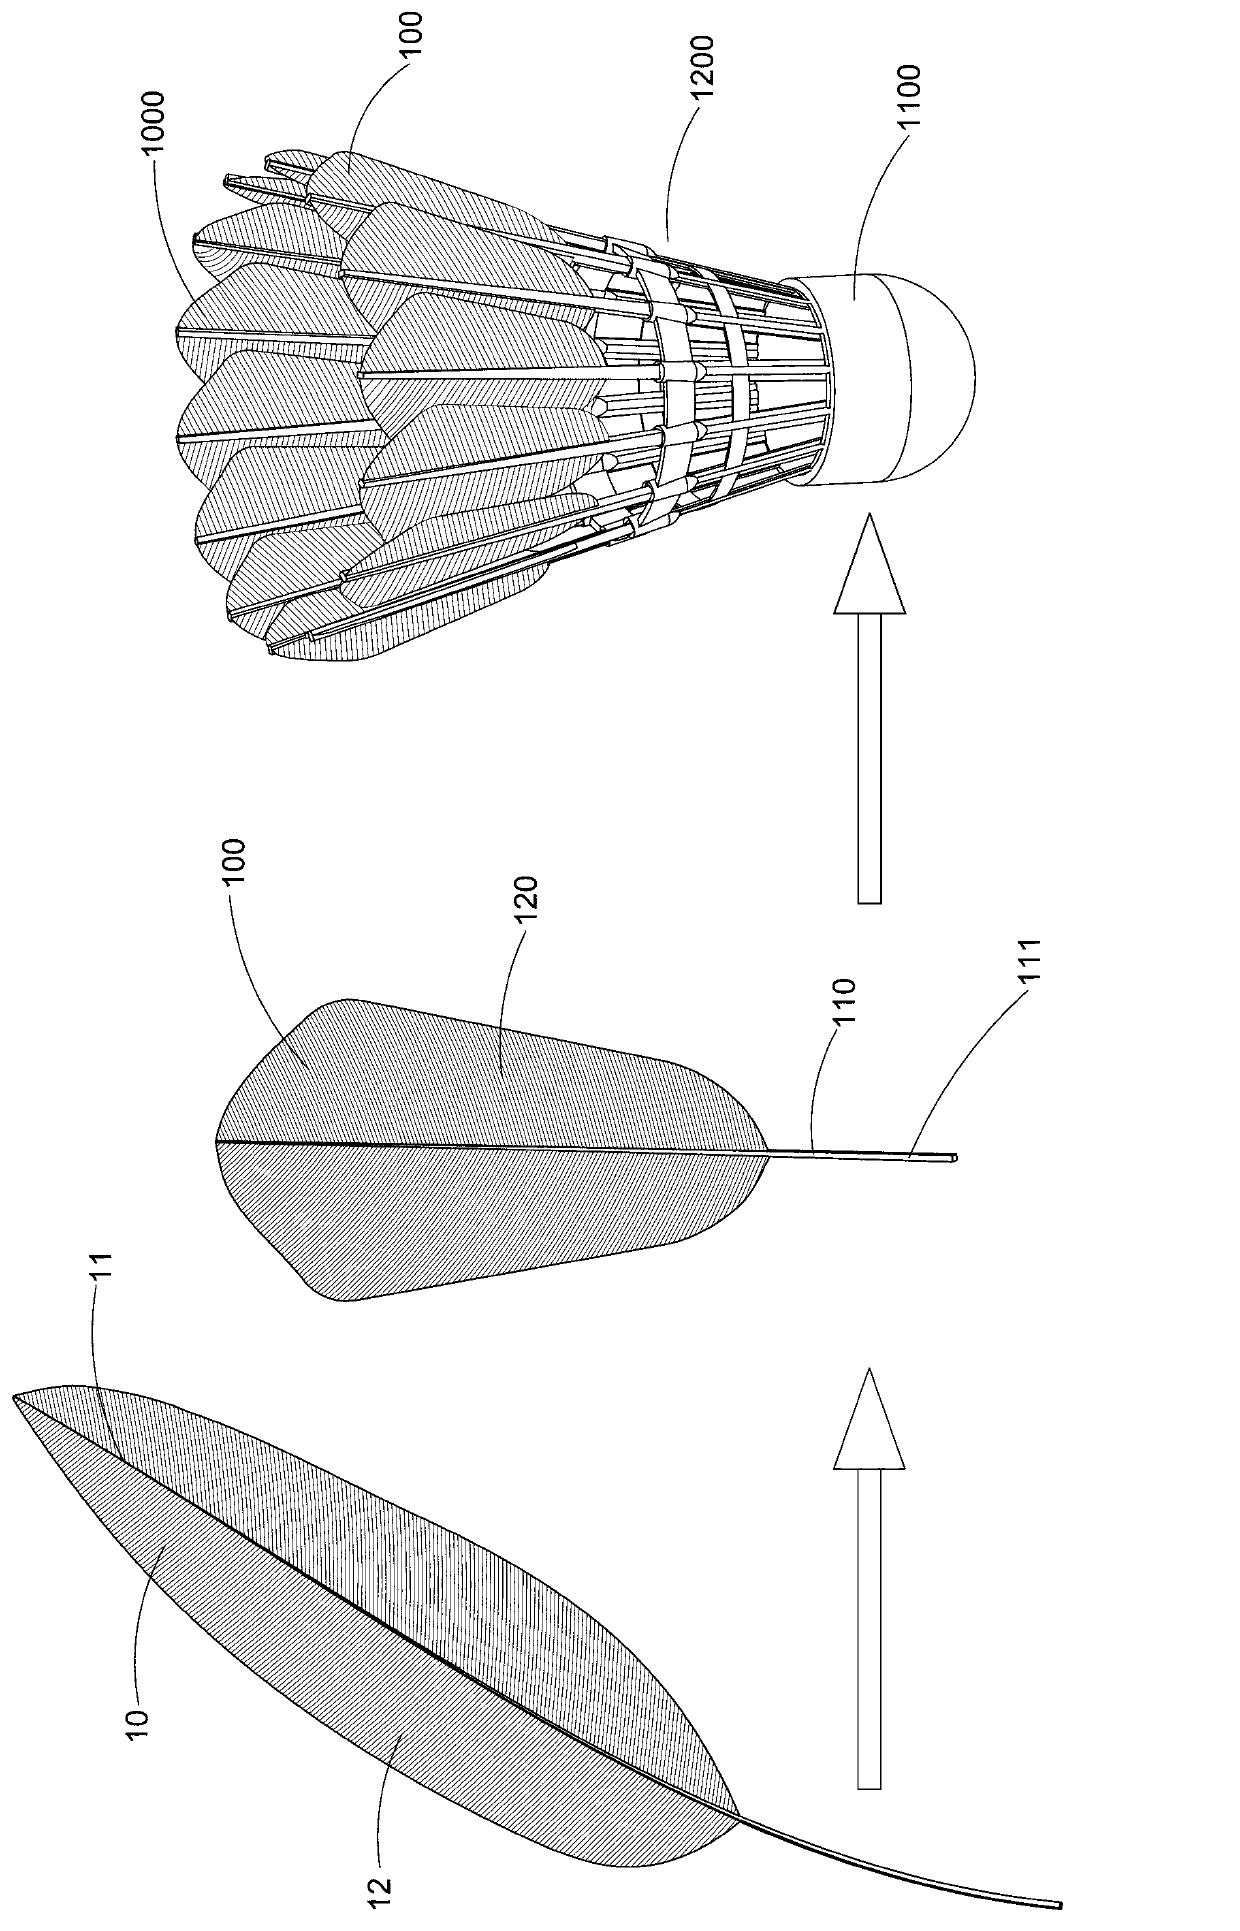 Manufacturing method of badmintons